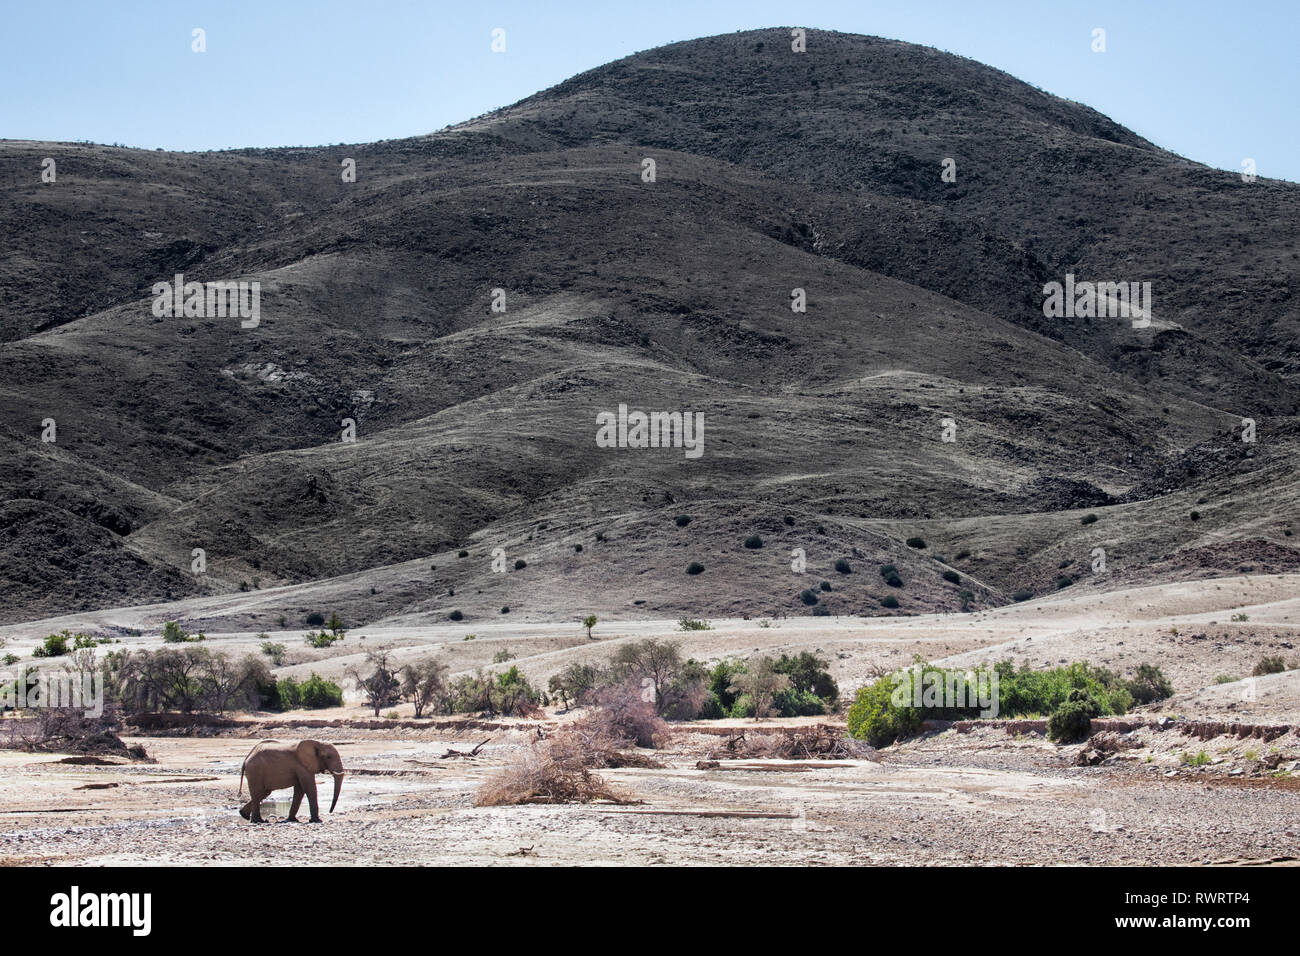 A desert Elephant near Purros, Namibia. Stock Photo